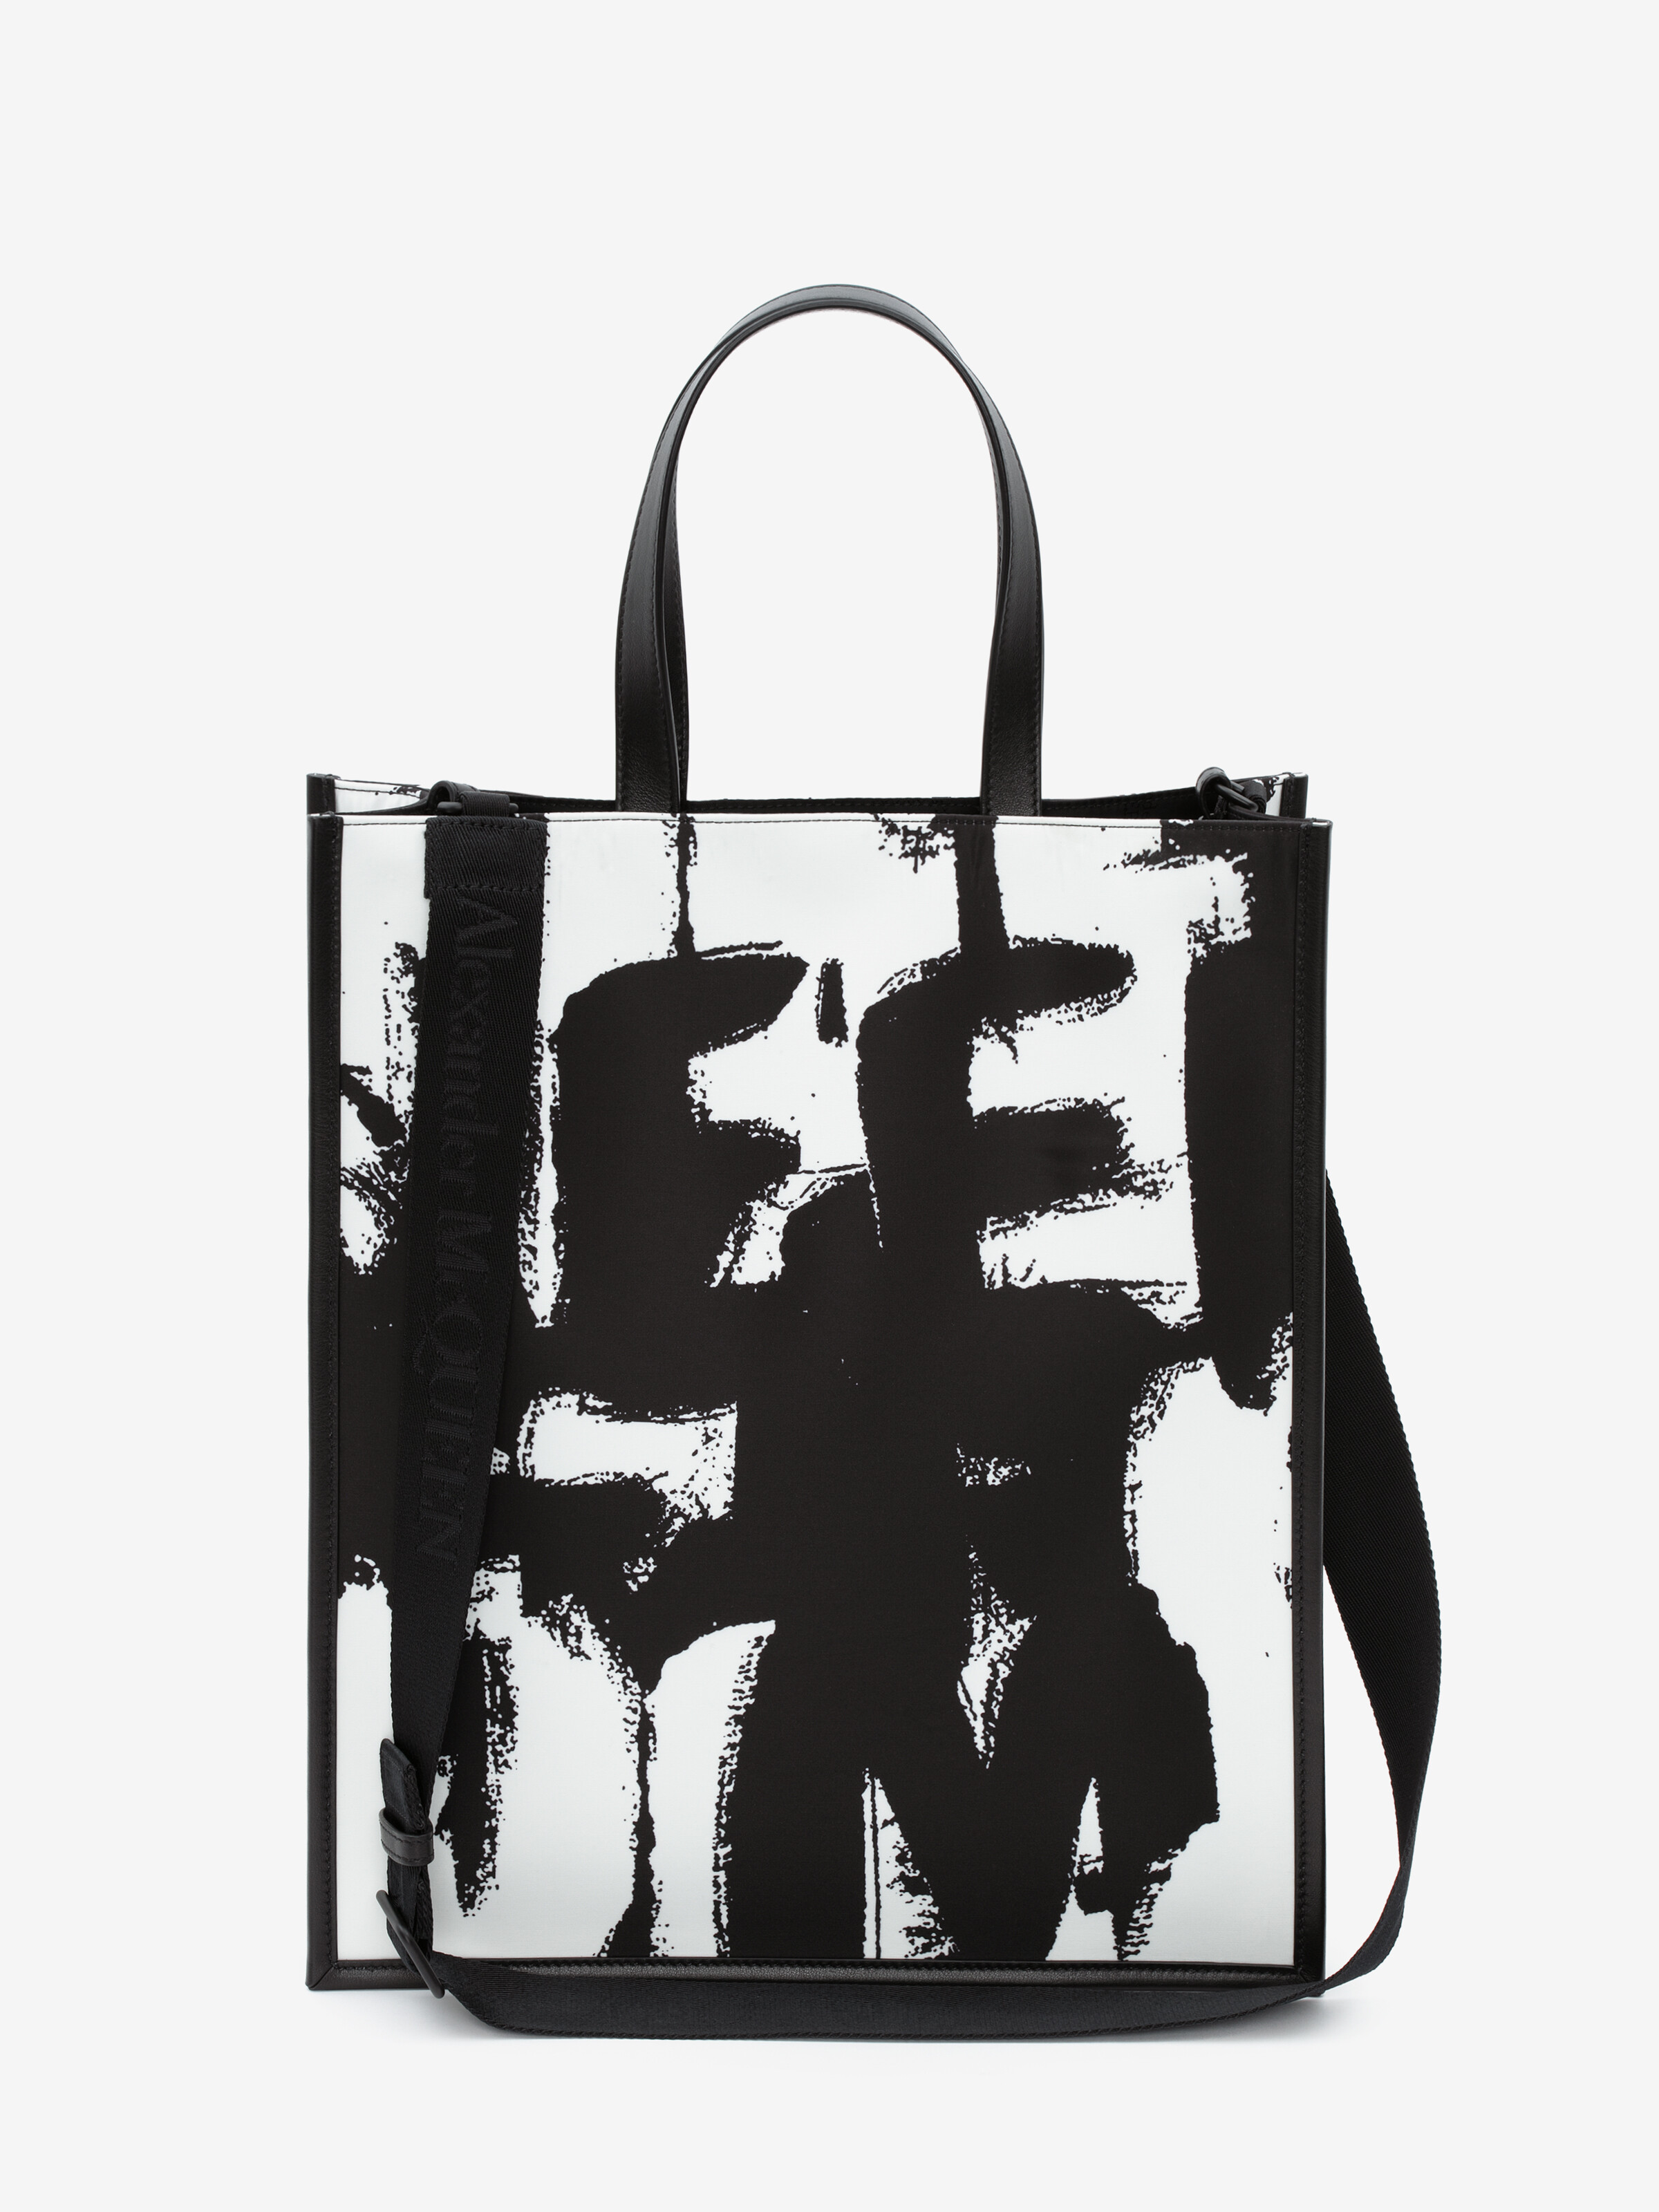 Alexander McQueen Men's Allover Graffiti Logo Leather Messenger Bag